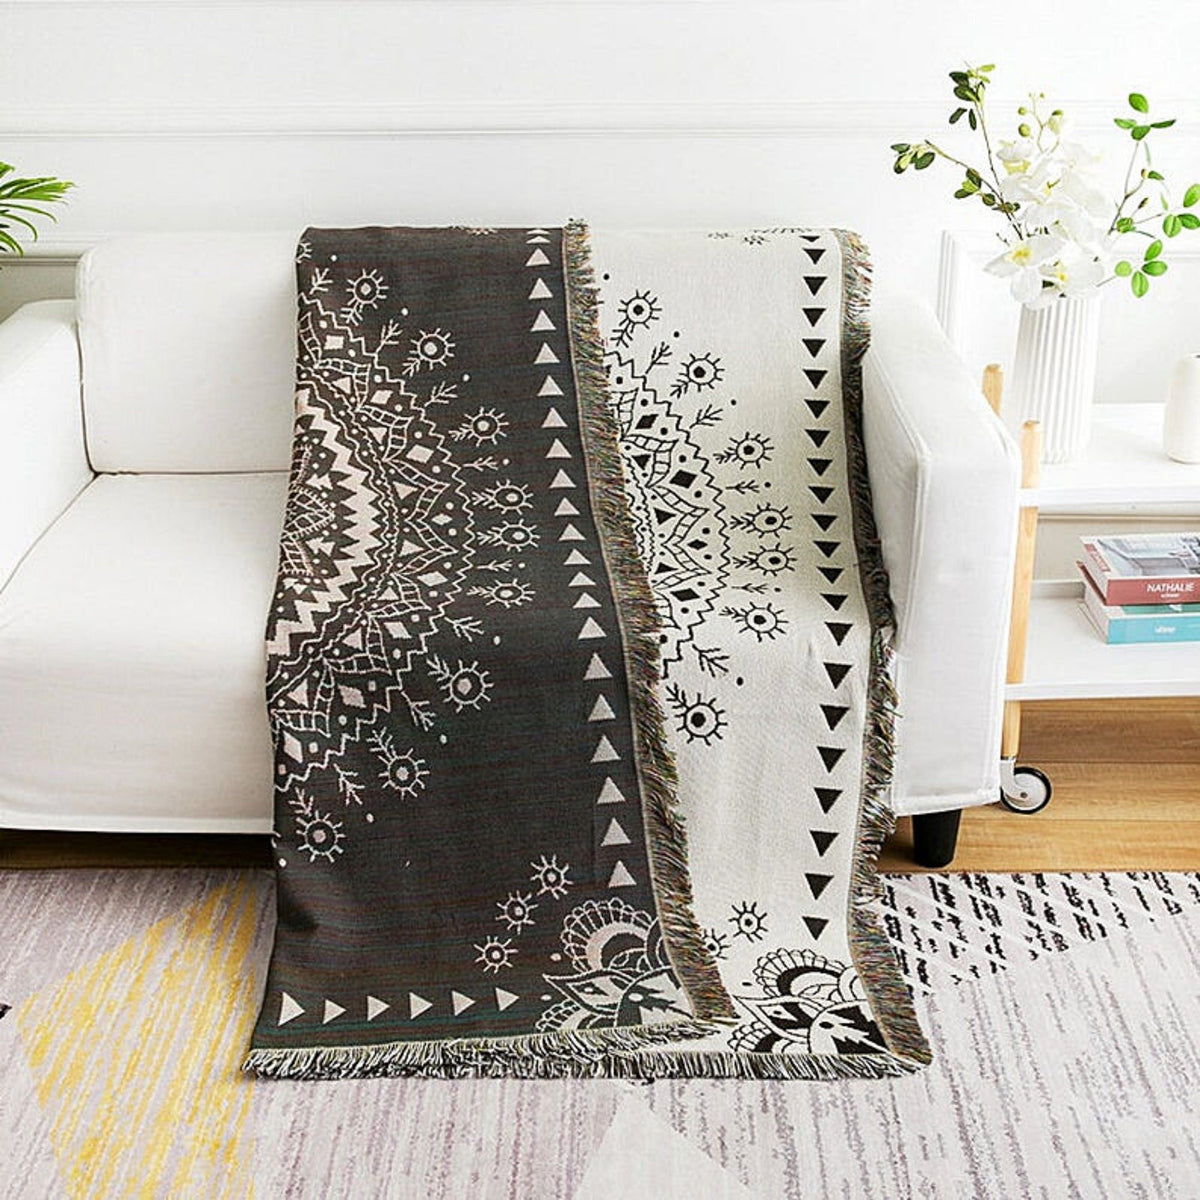 Mandala Throw Blanket - ESSENTIAL STOCKIST 130cm x 160cm ESSENTIAL STOCKIST